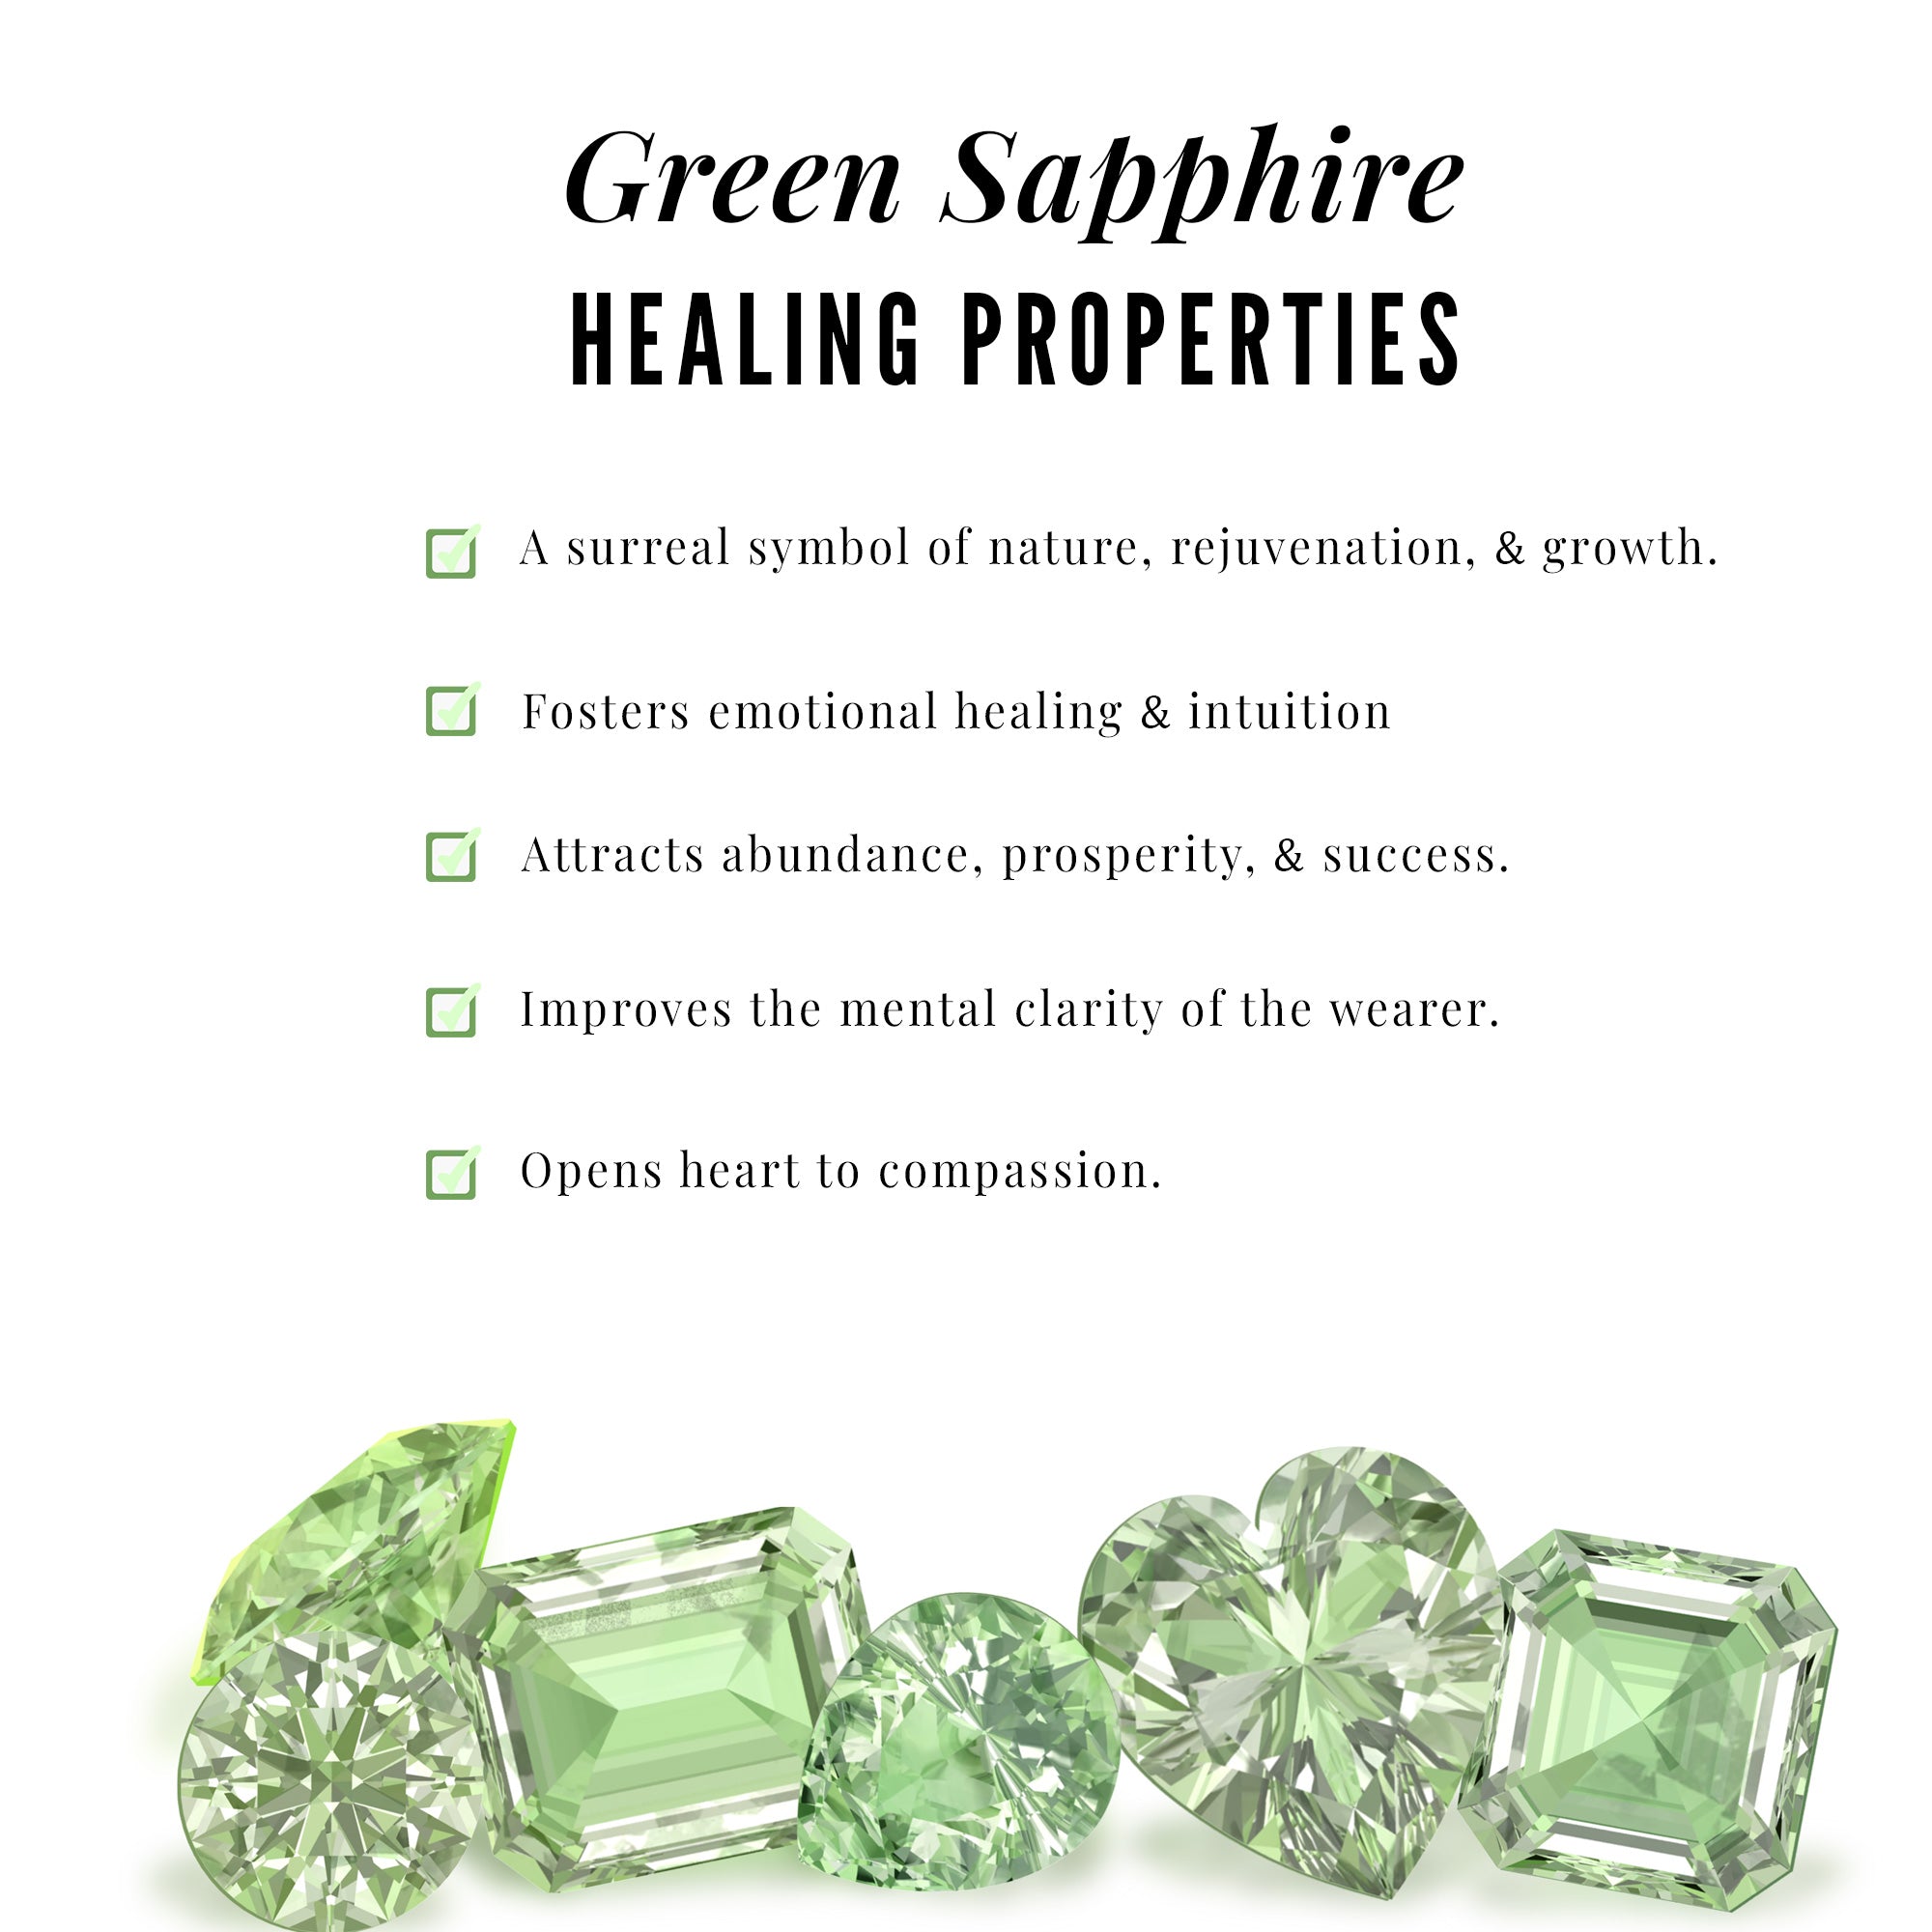 Gypsy Set Green Sapphire Heart Stud Earrings Green Sapphire - ( AAA ) - Quality - Rosec Jewels